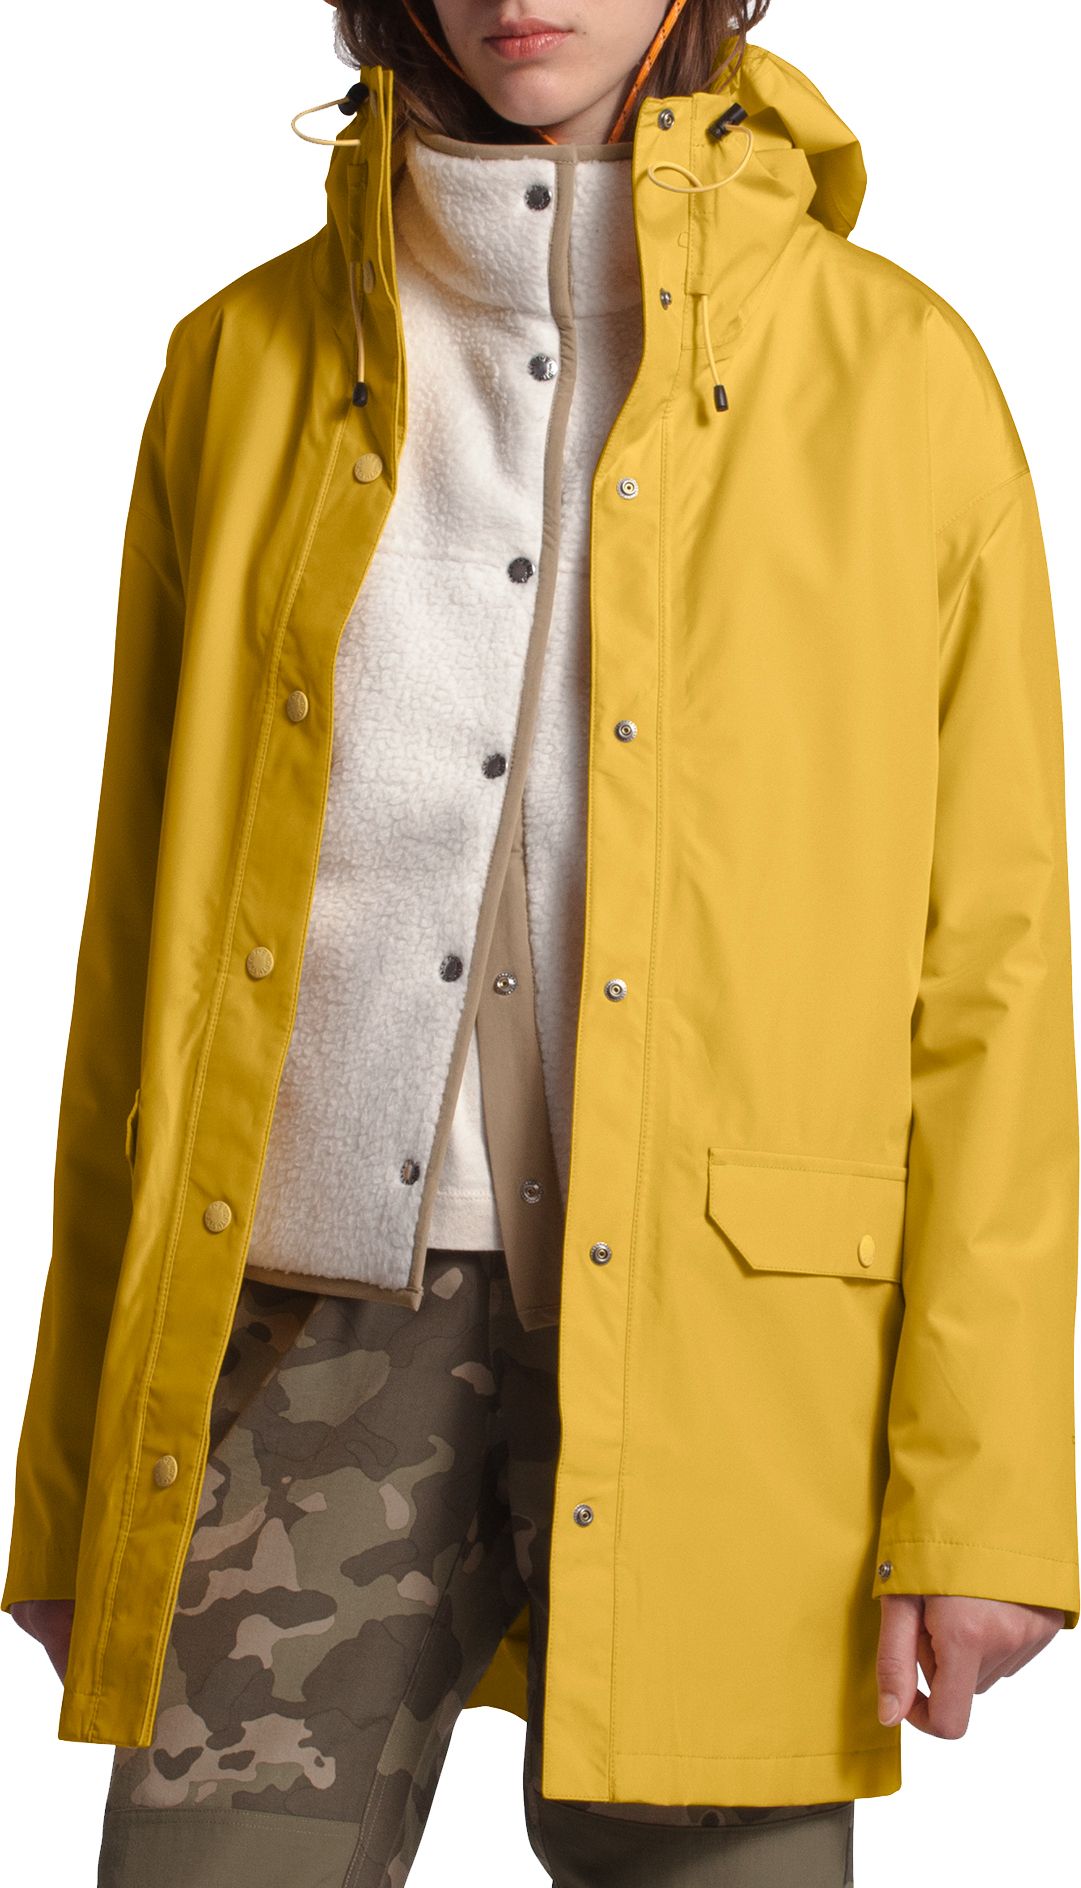 north face yellow waterproof jacket